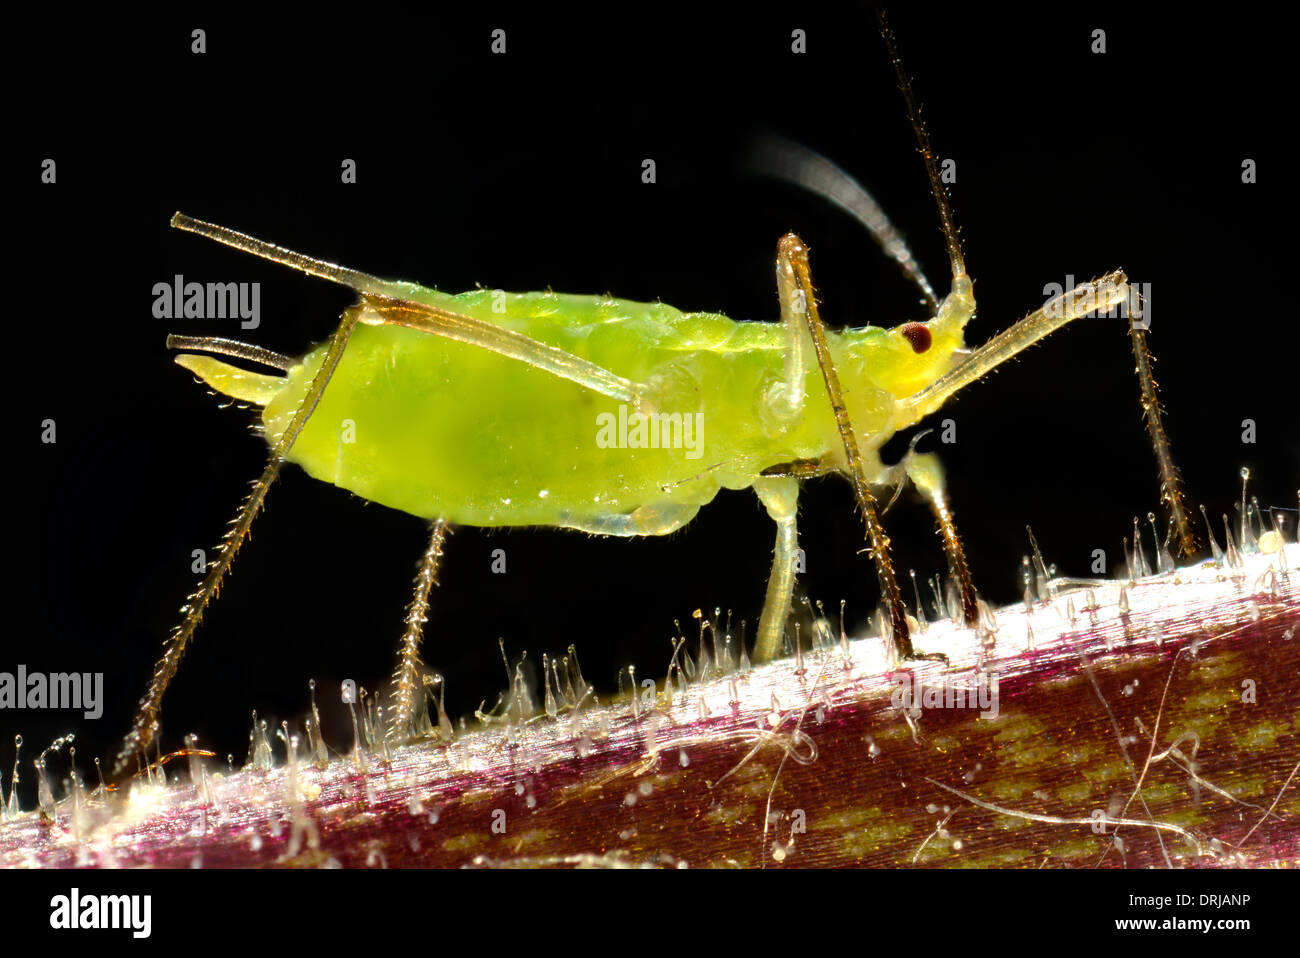 adult pea louse (Acyrthosiphon pisum), tube aphid (Aphidoidea), extreme macroadmission, adulte Erbsenlaus (Acyrthosiphon pisum), Stock Photo